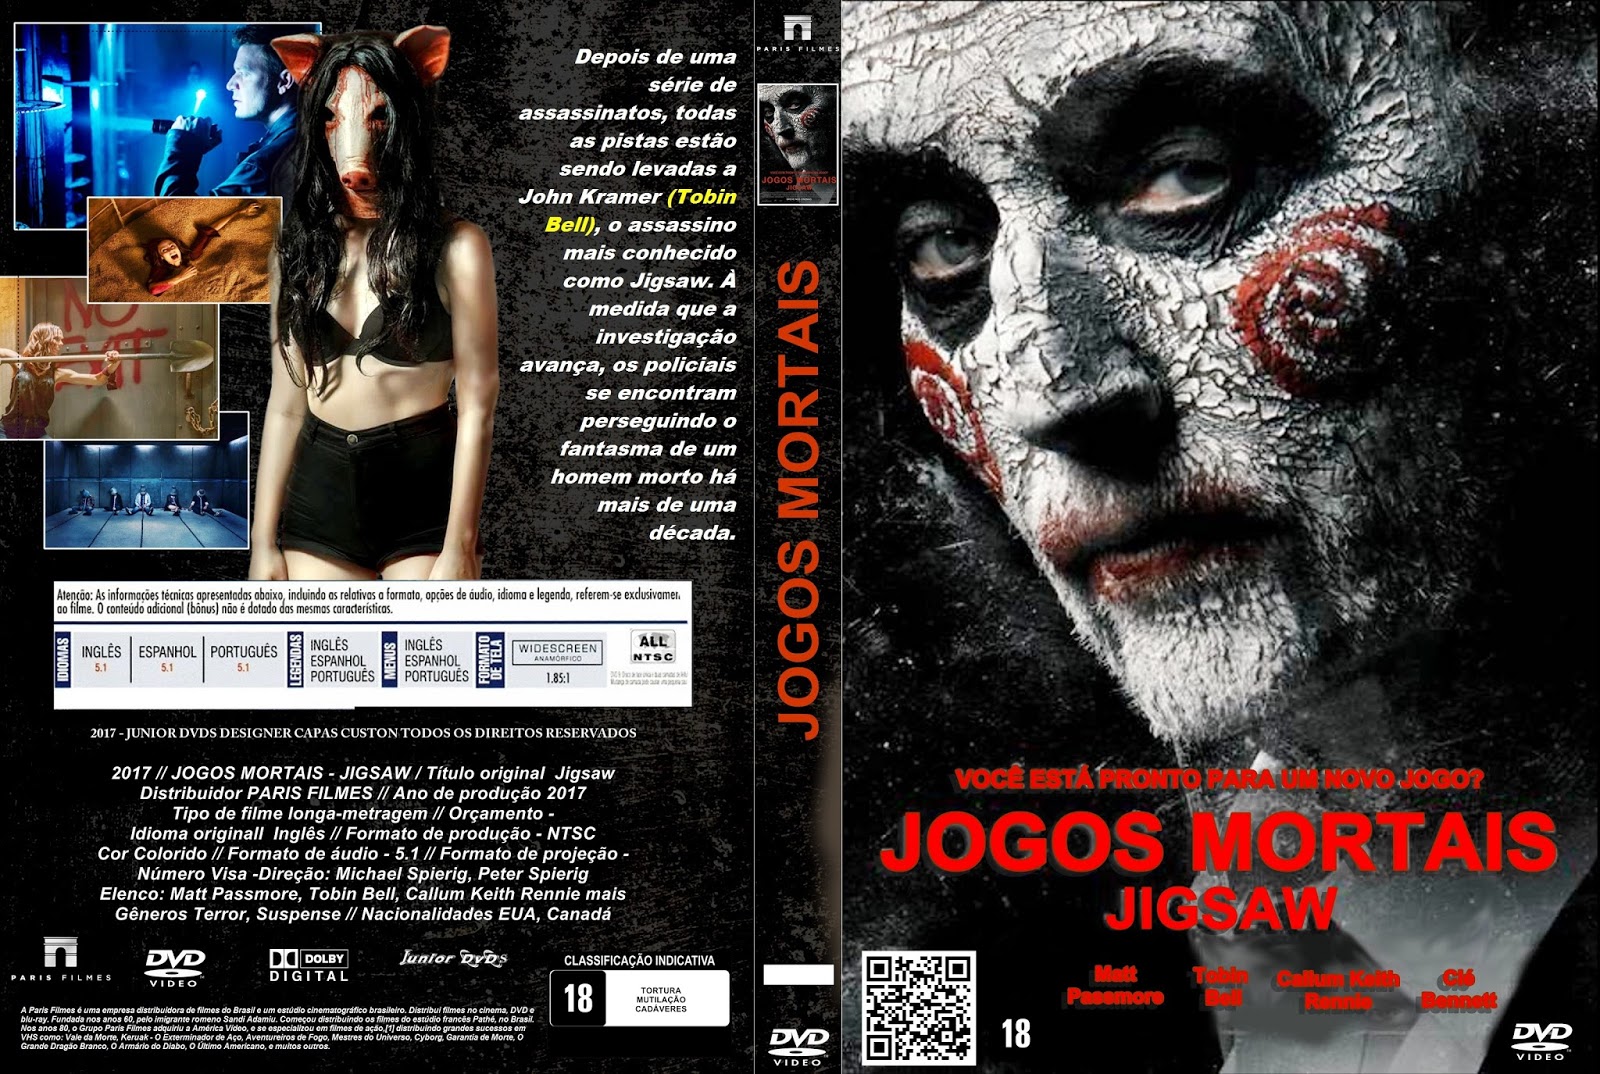 SPACETREK66 - DVD JOGOS MORTAIS V